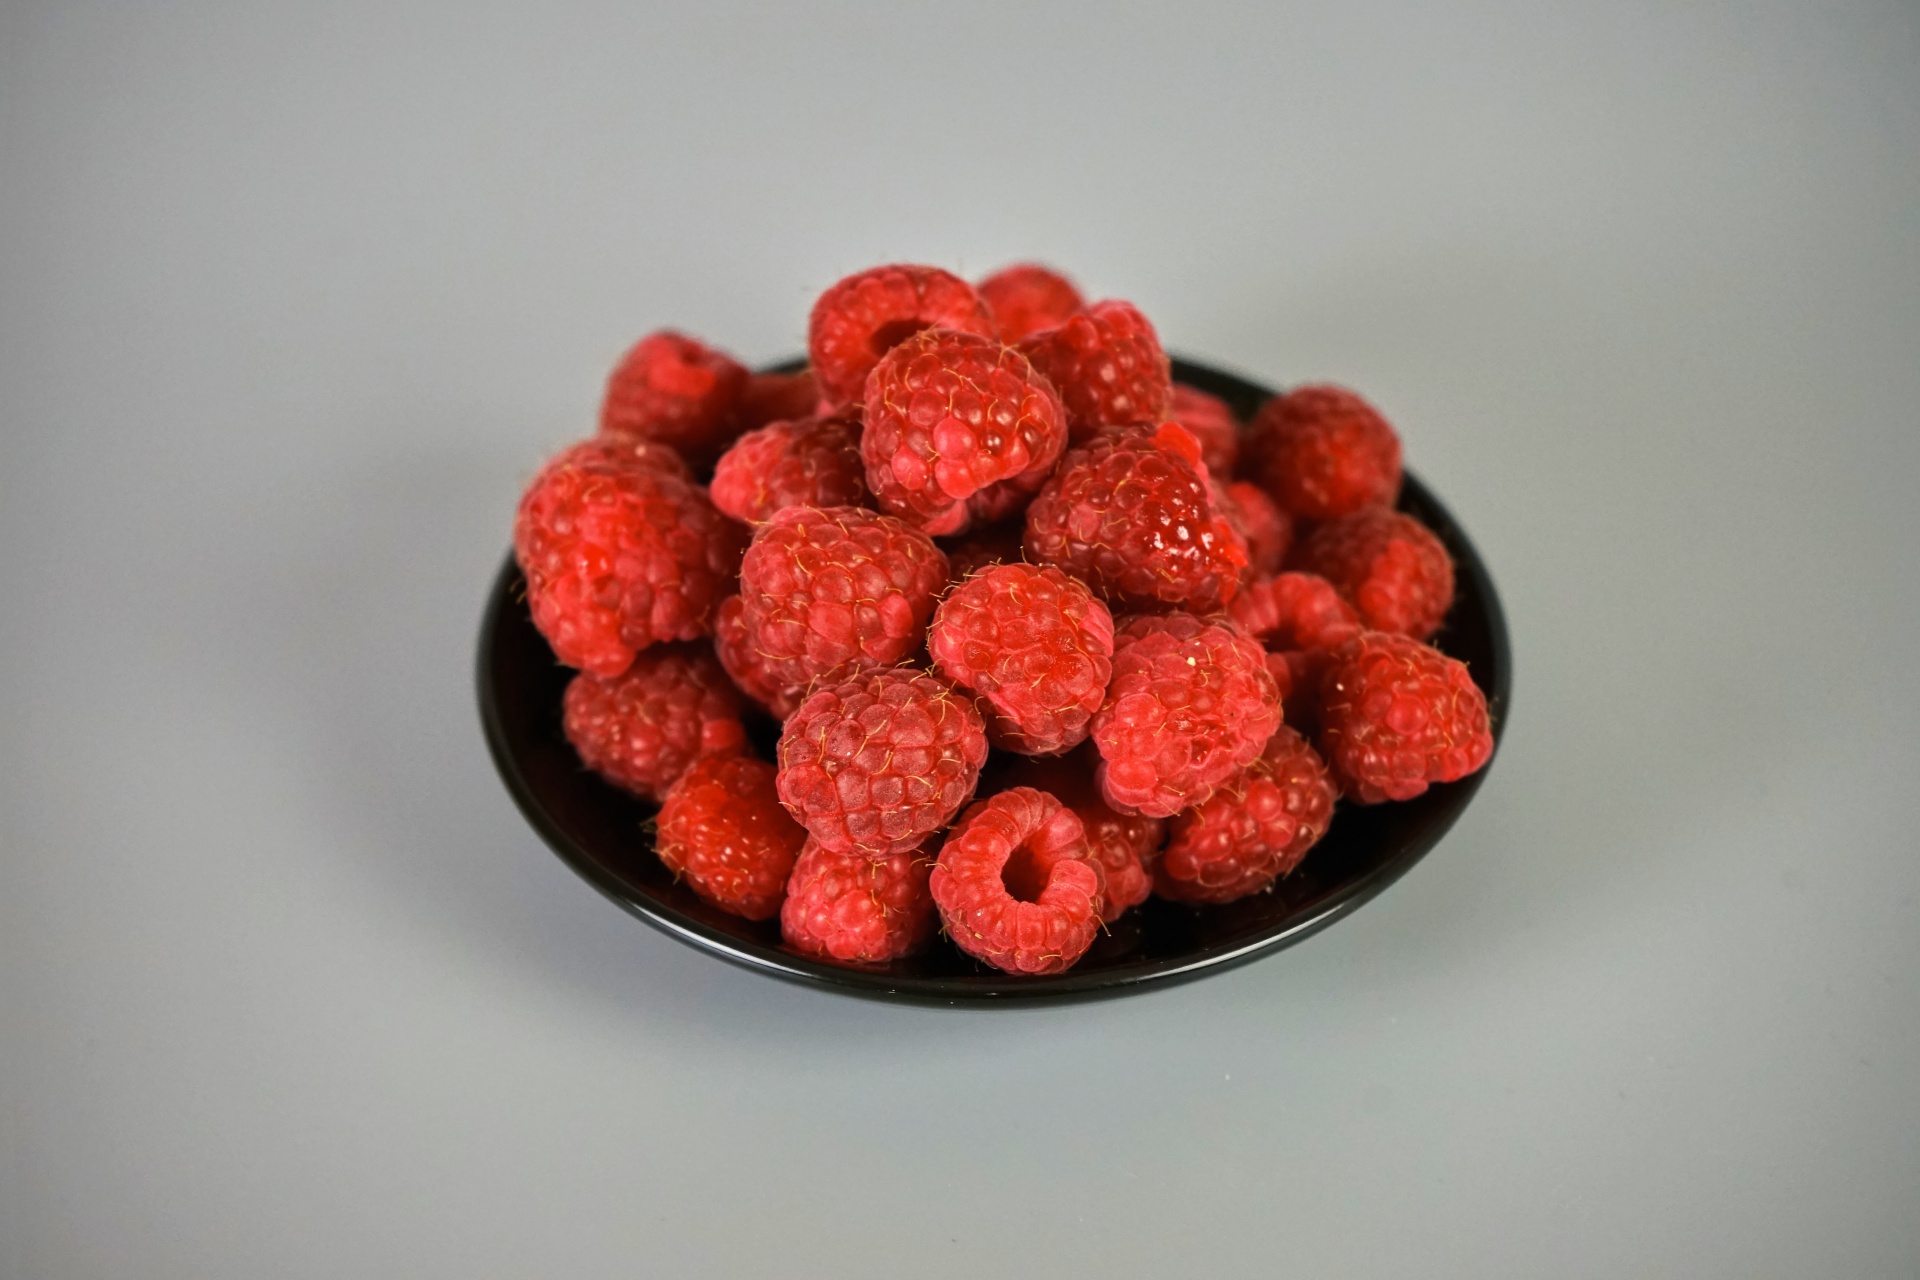 Dessert of raspberries